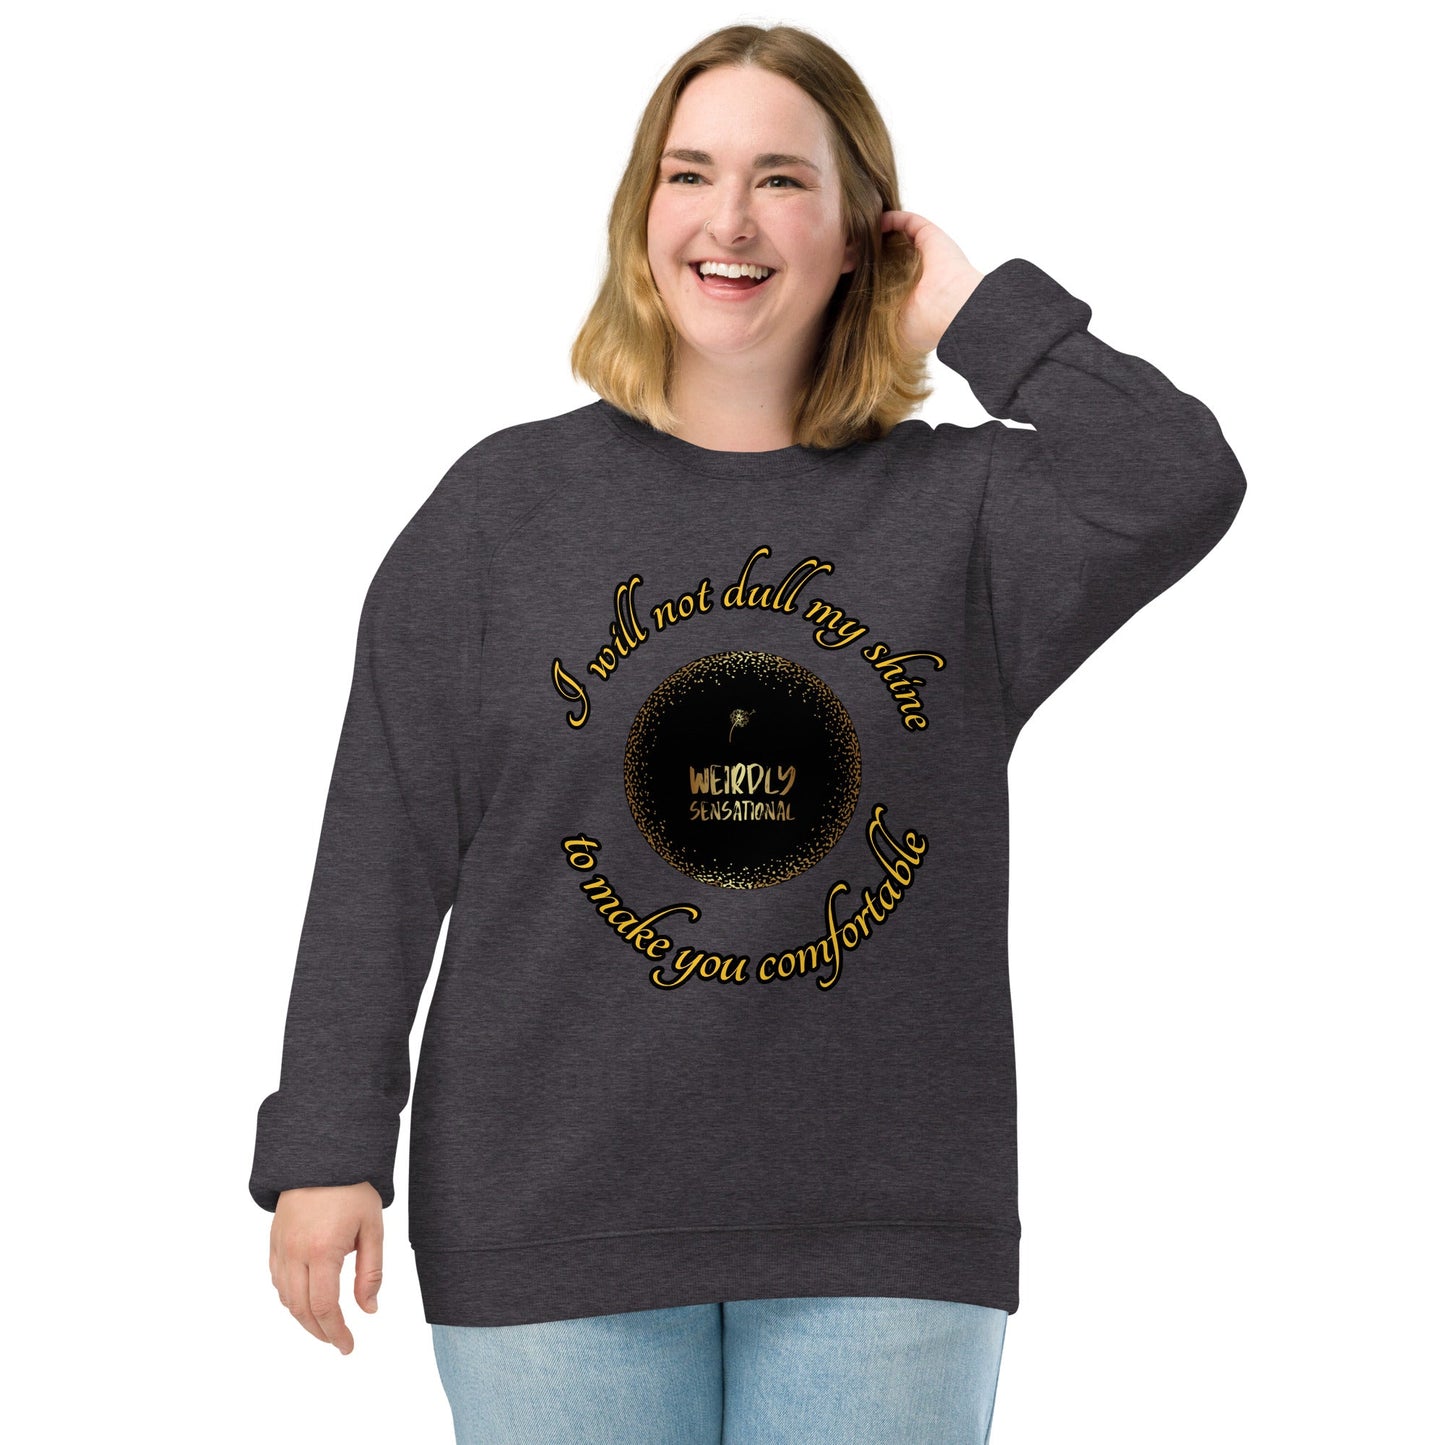 Dull my shine Unisex organic raglan sweatshirt - Weirdly Sensational